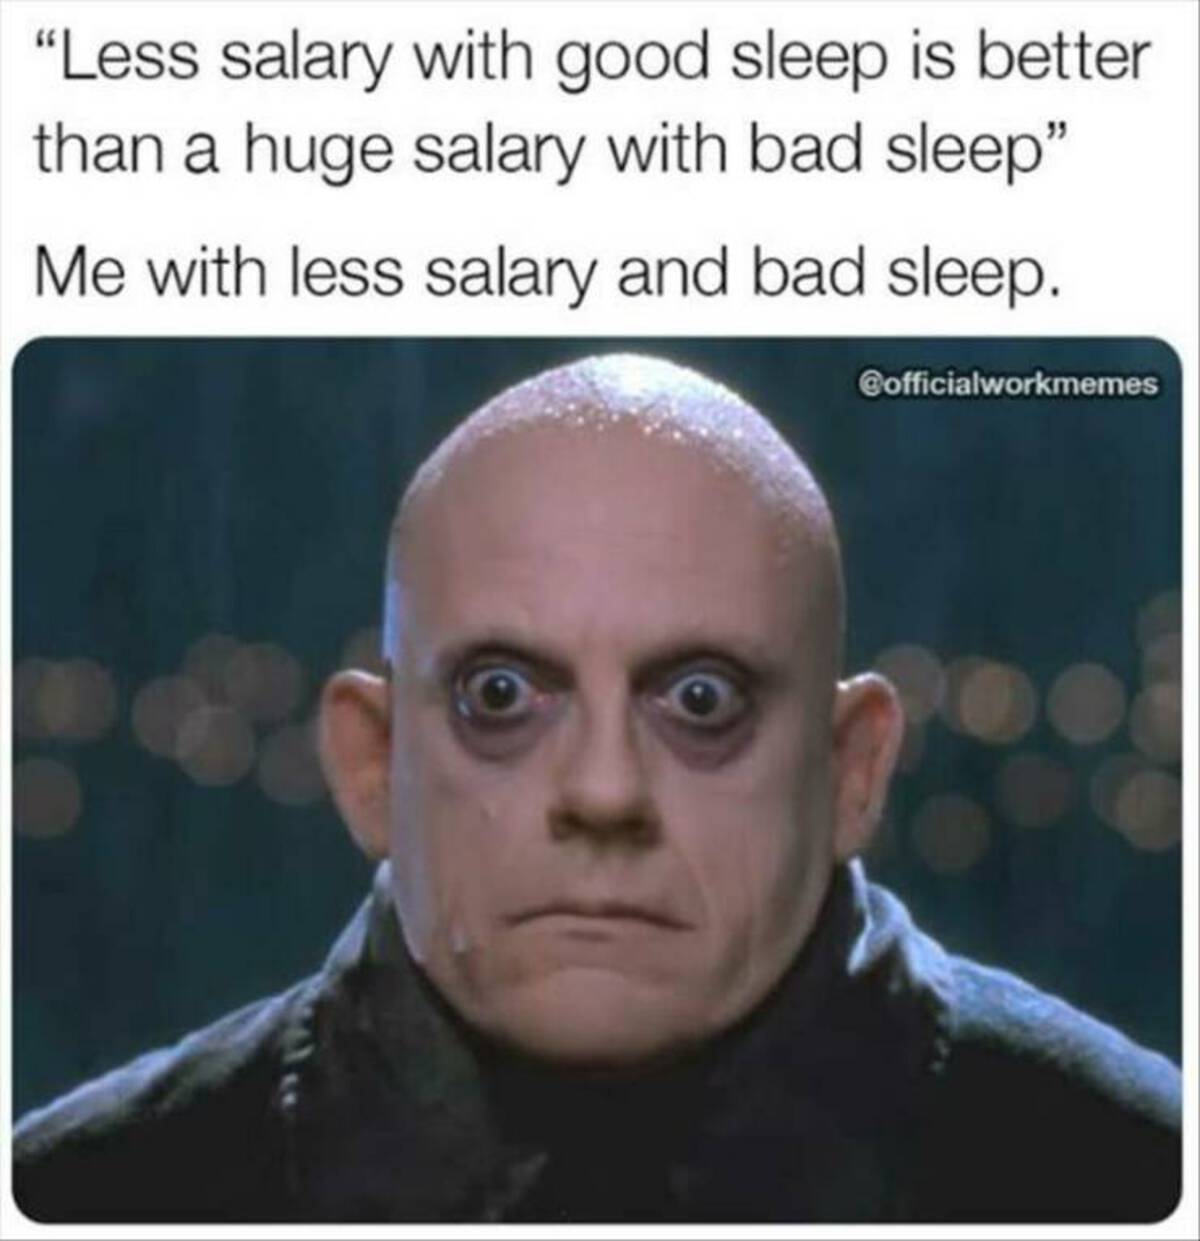 photo caption - "Less salary with good sleep is better than a huge salary with bad sleep" Me with less salary and bad sleep.